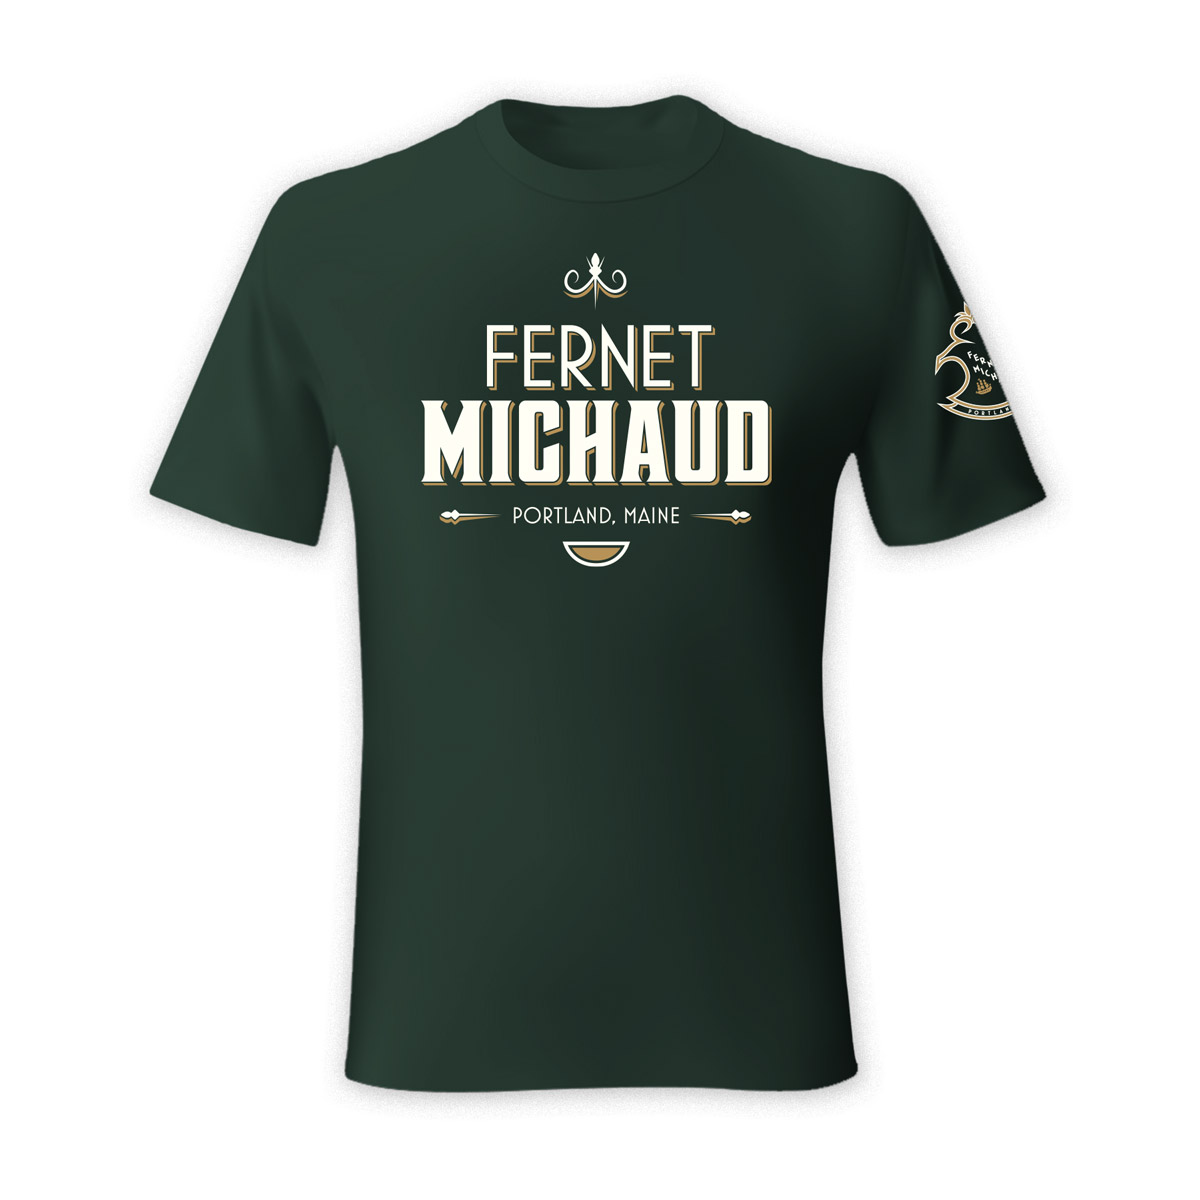 Fernet Michaud T-shirt